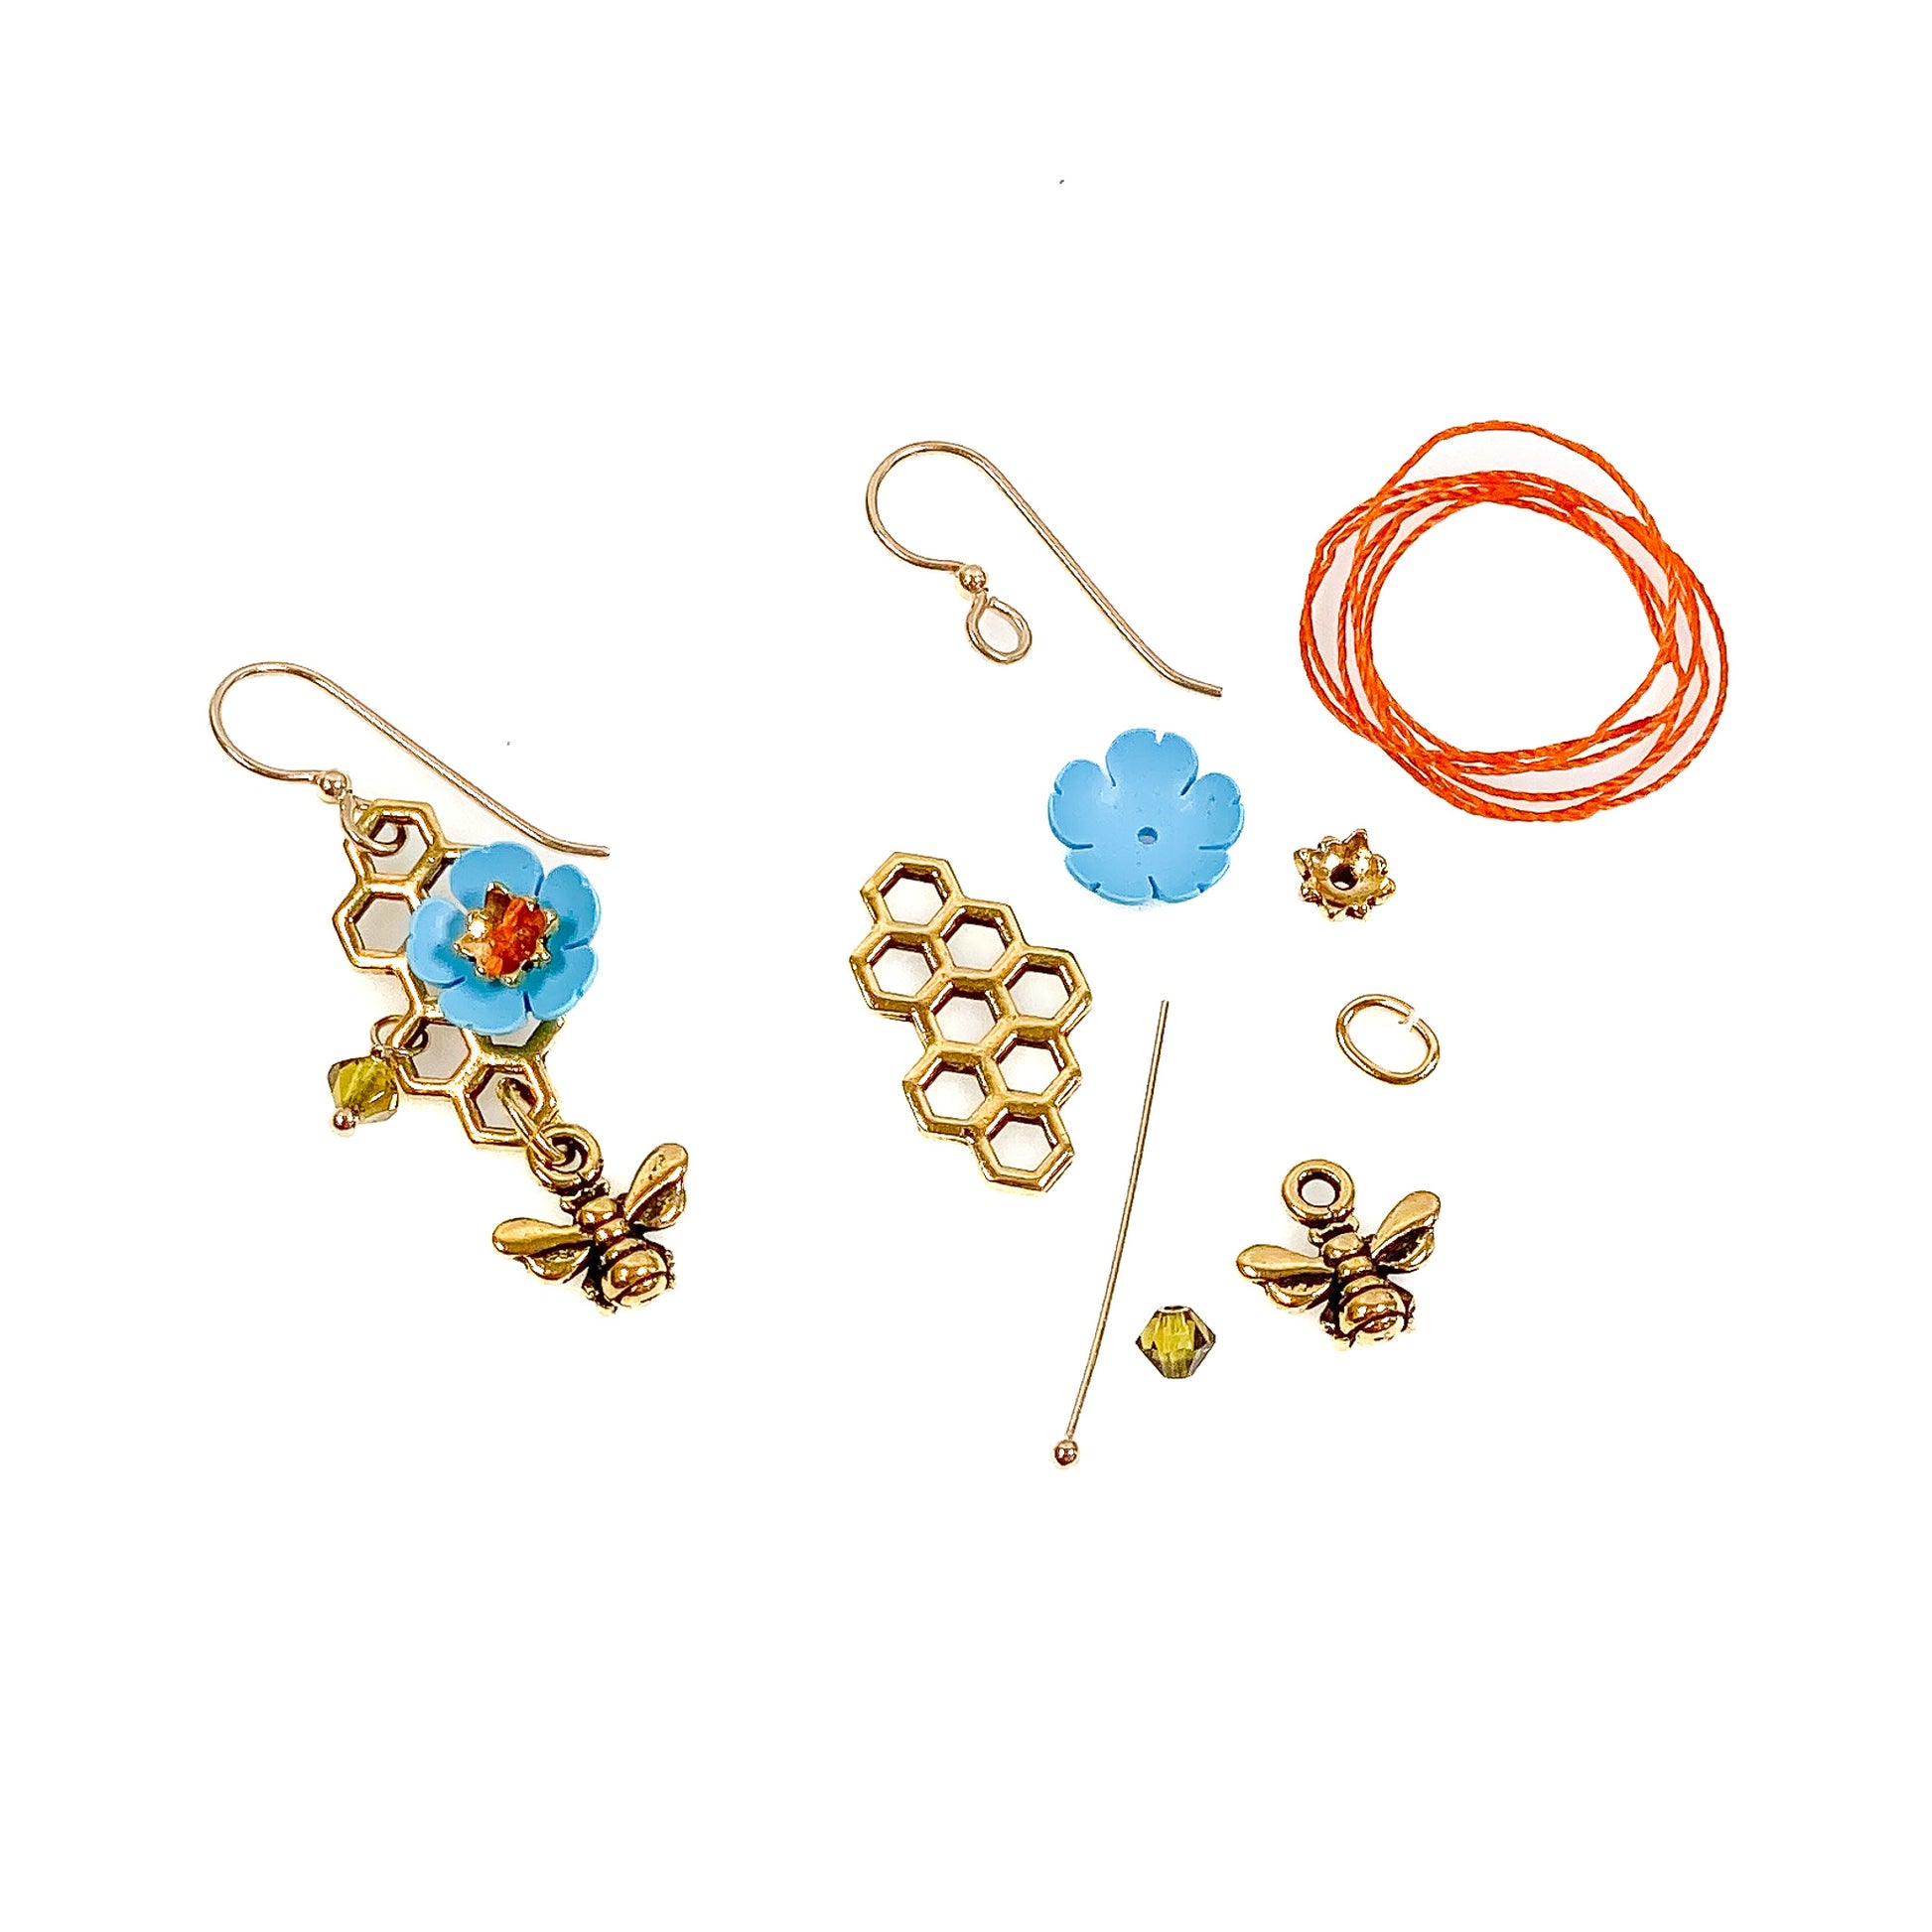 Honeybee Earring Kit - 3 Colors Available